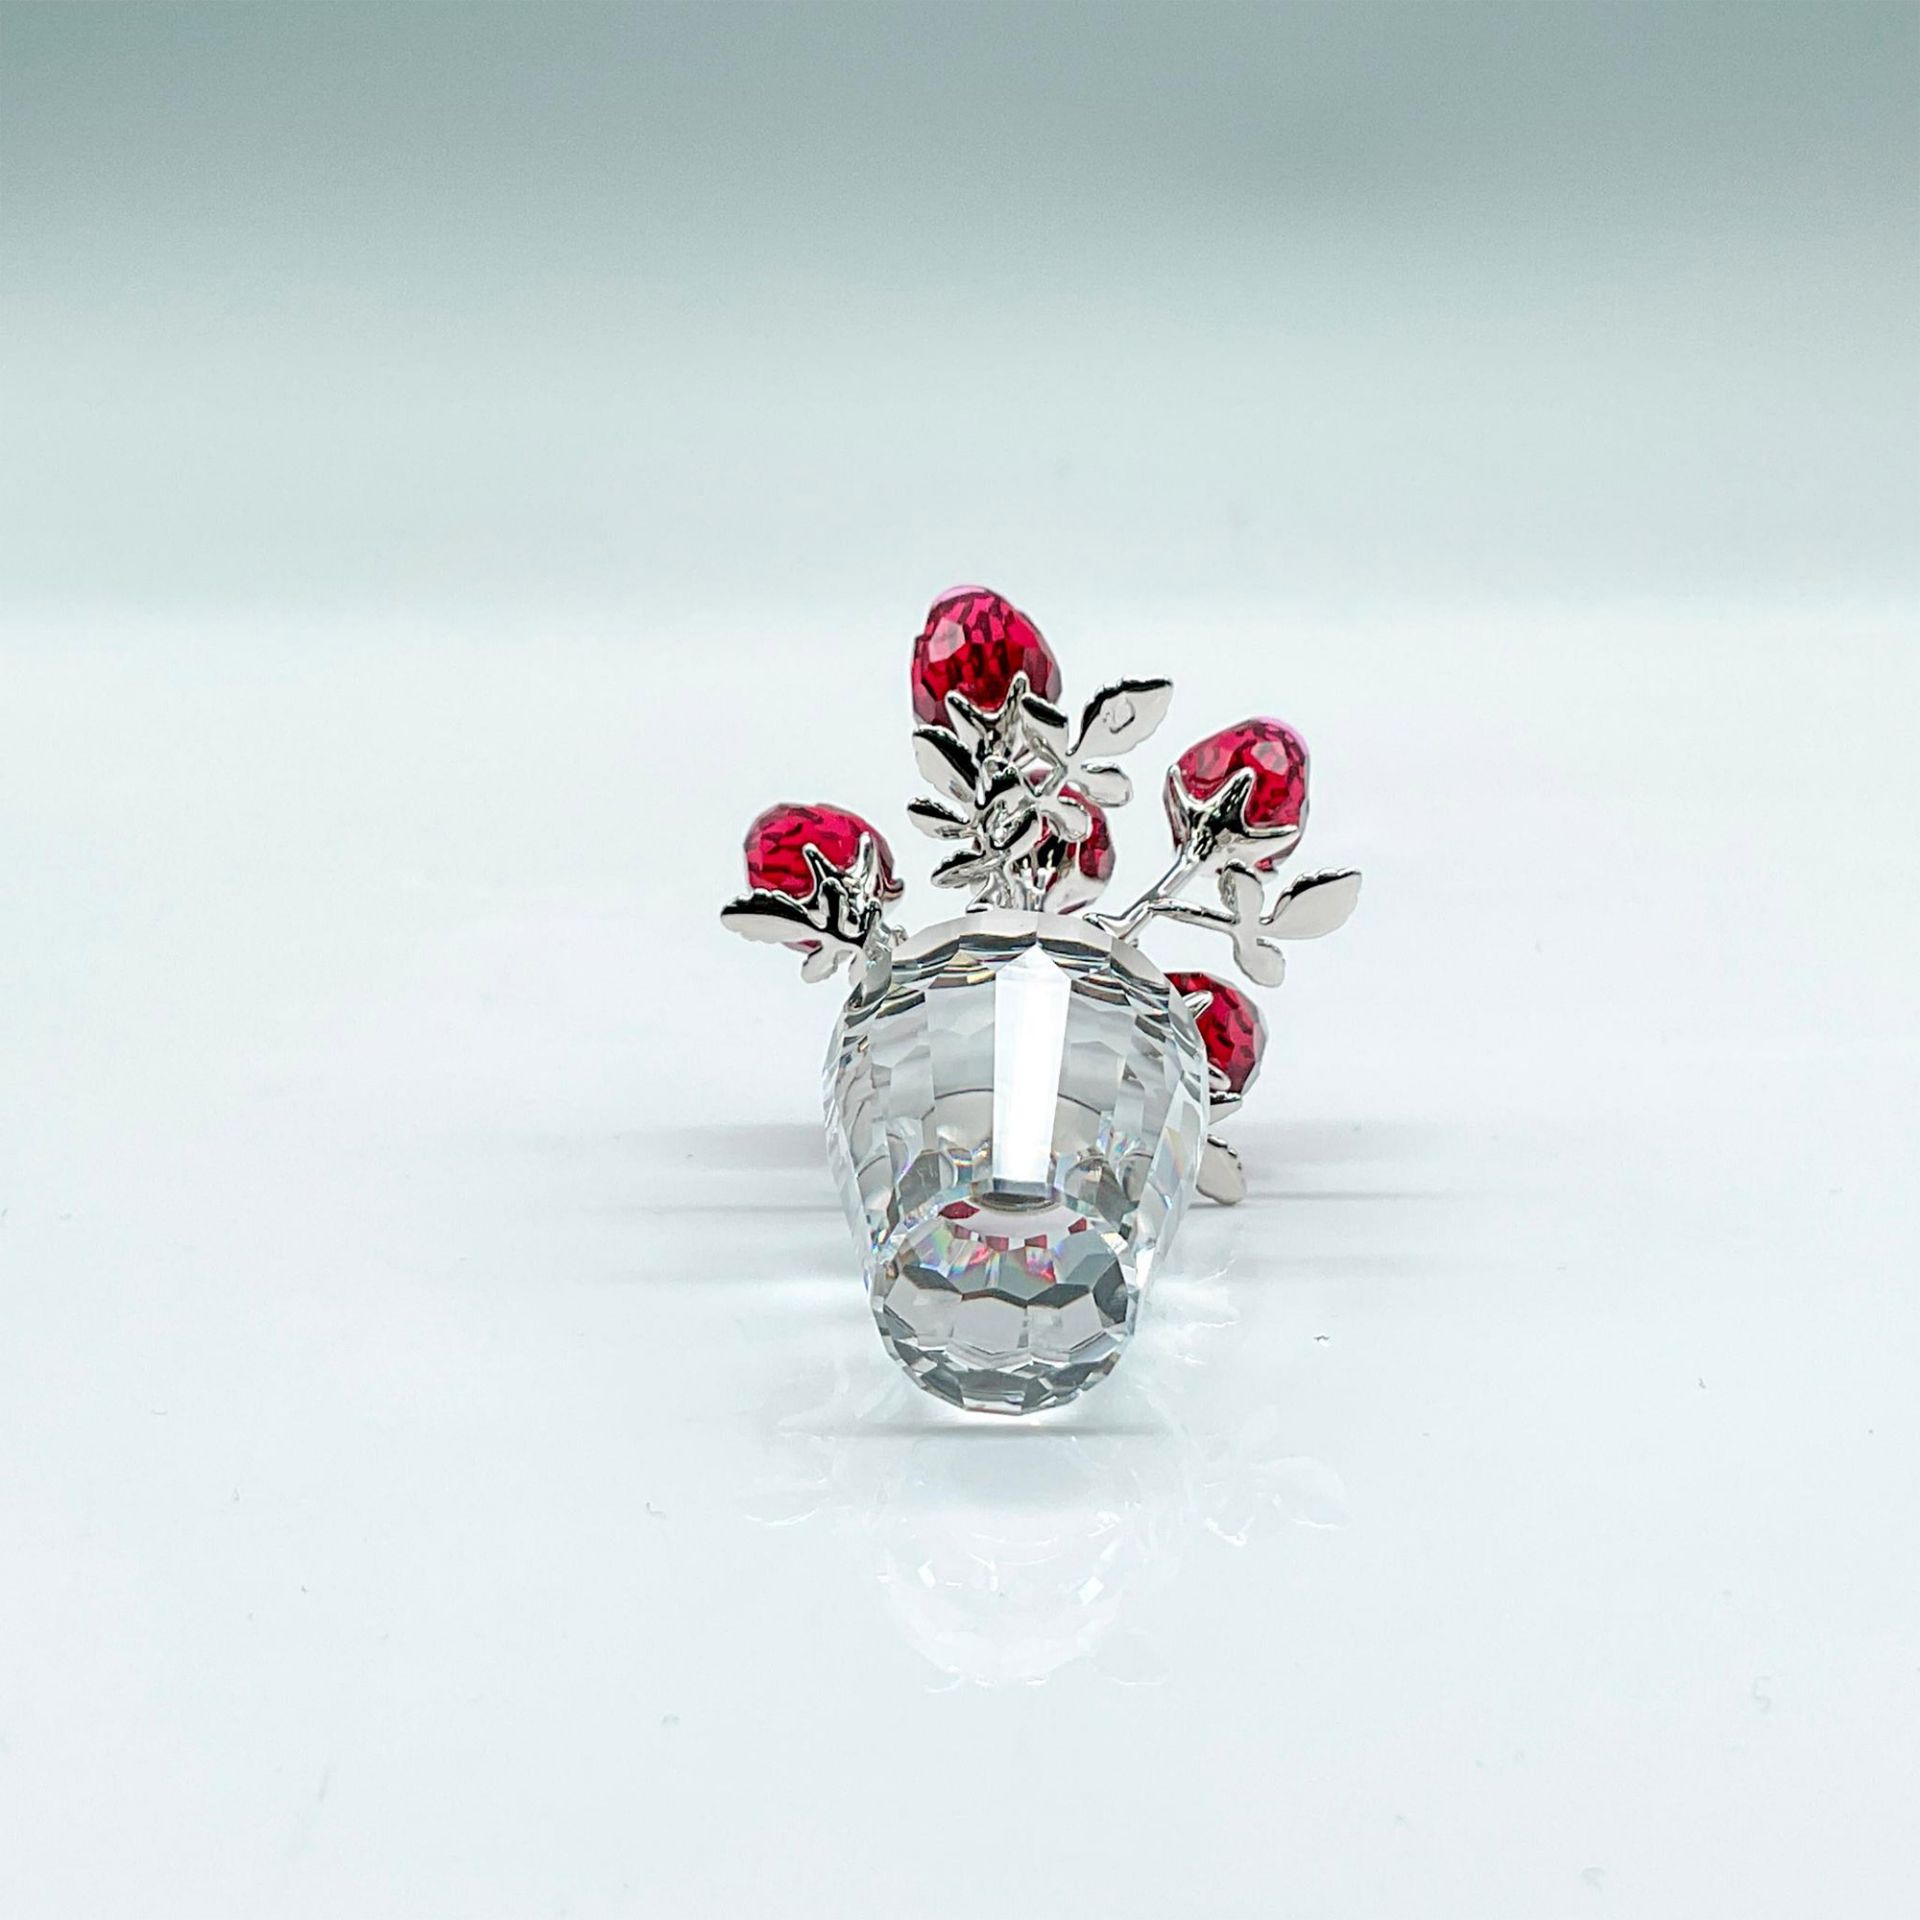 Swarovski Crystal Figurine, Red Roses with Silver Stems - Bild 3 aus 4